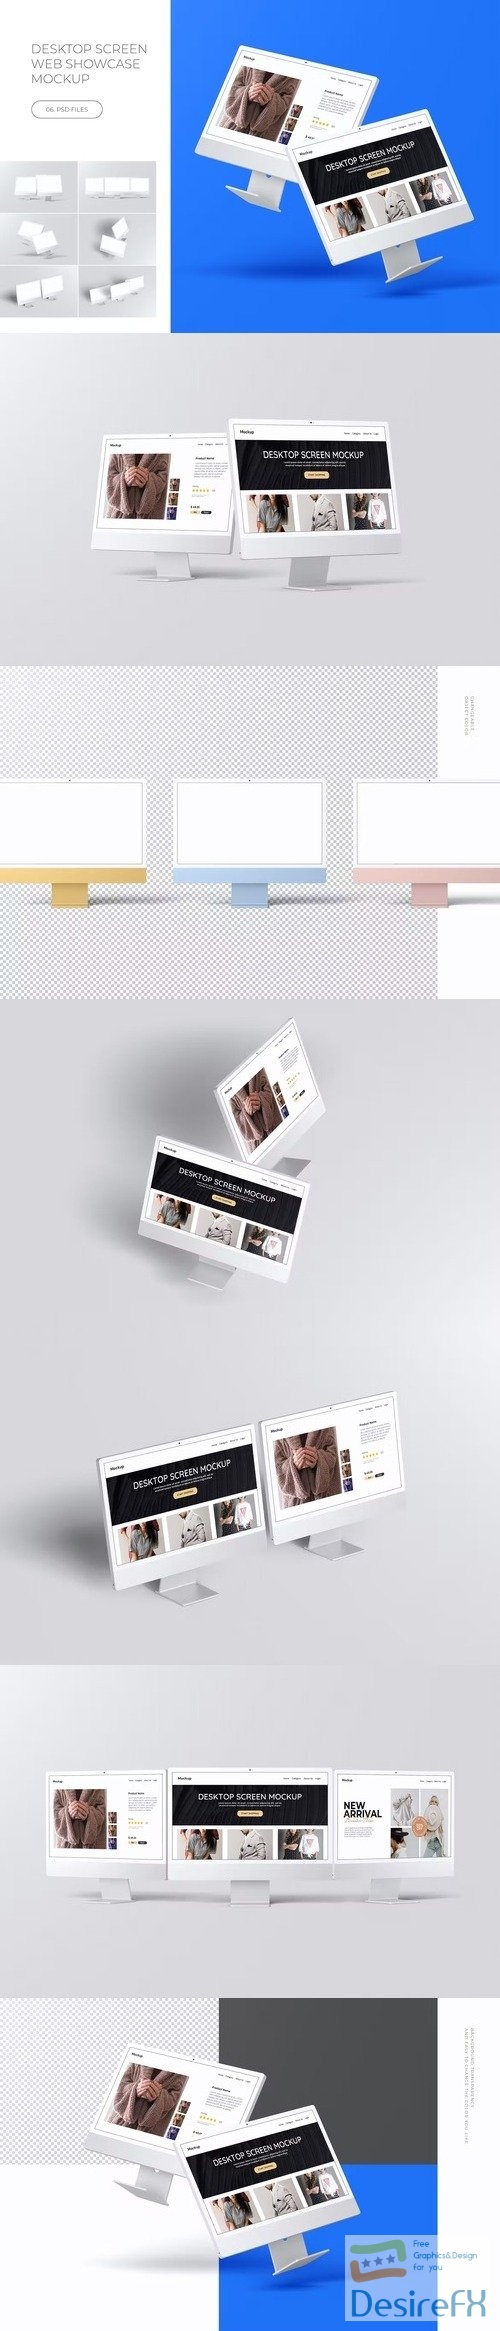 Desktop Screen & Web Showcase Mockup